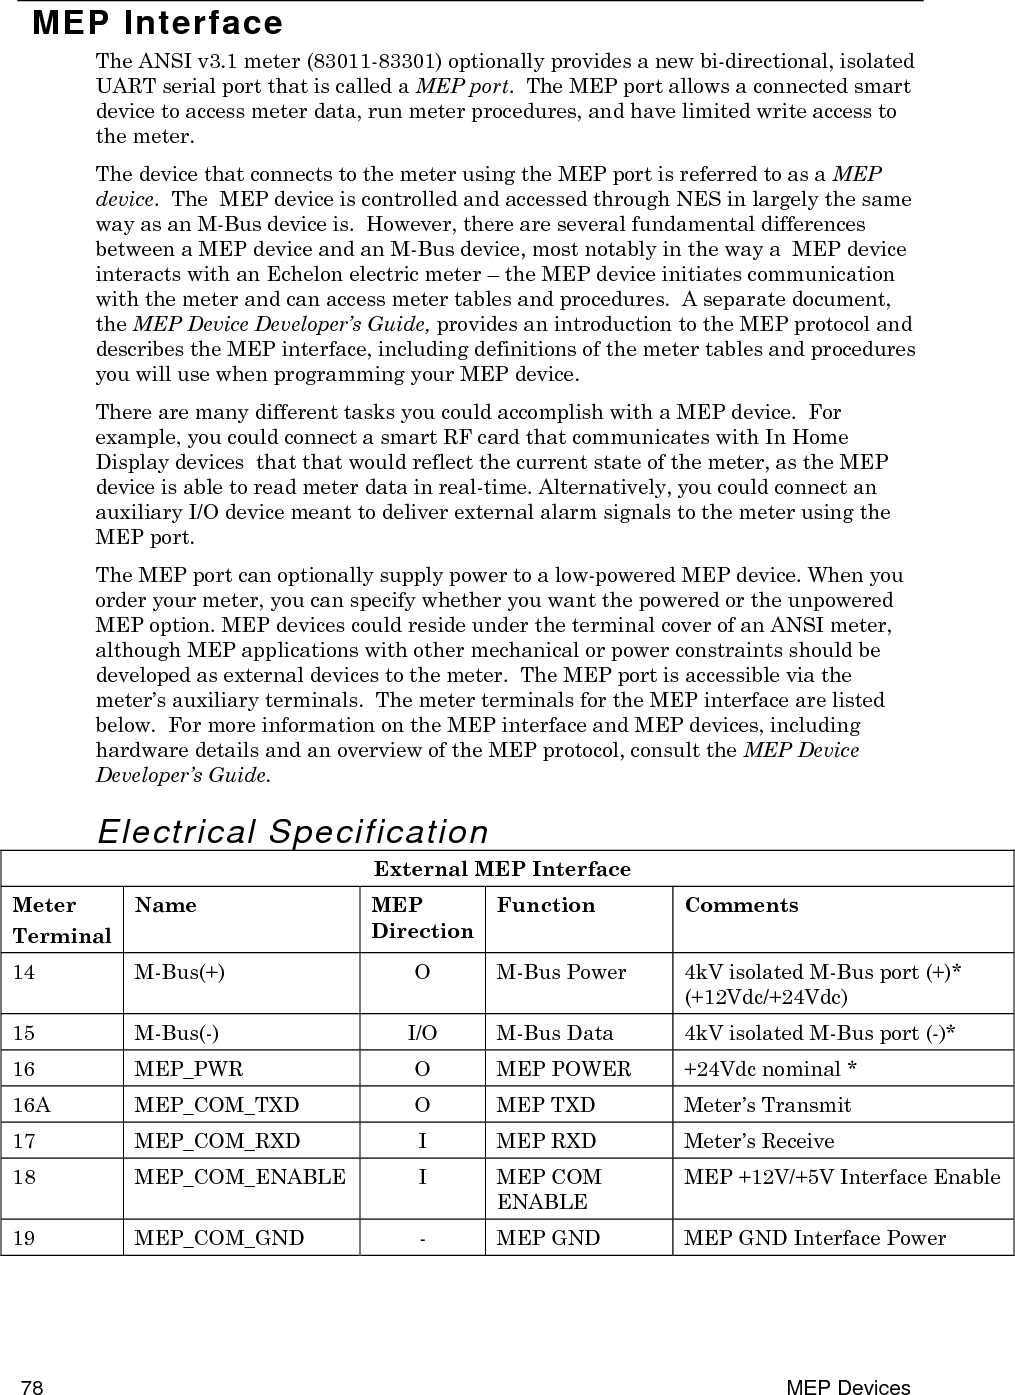  ANSI Electric Meter v3.1 User’s Guide  79  